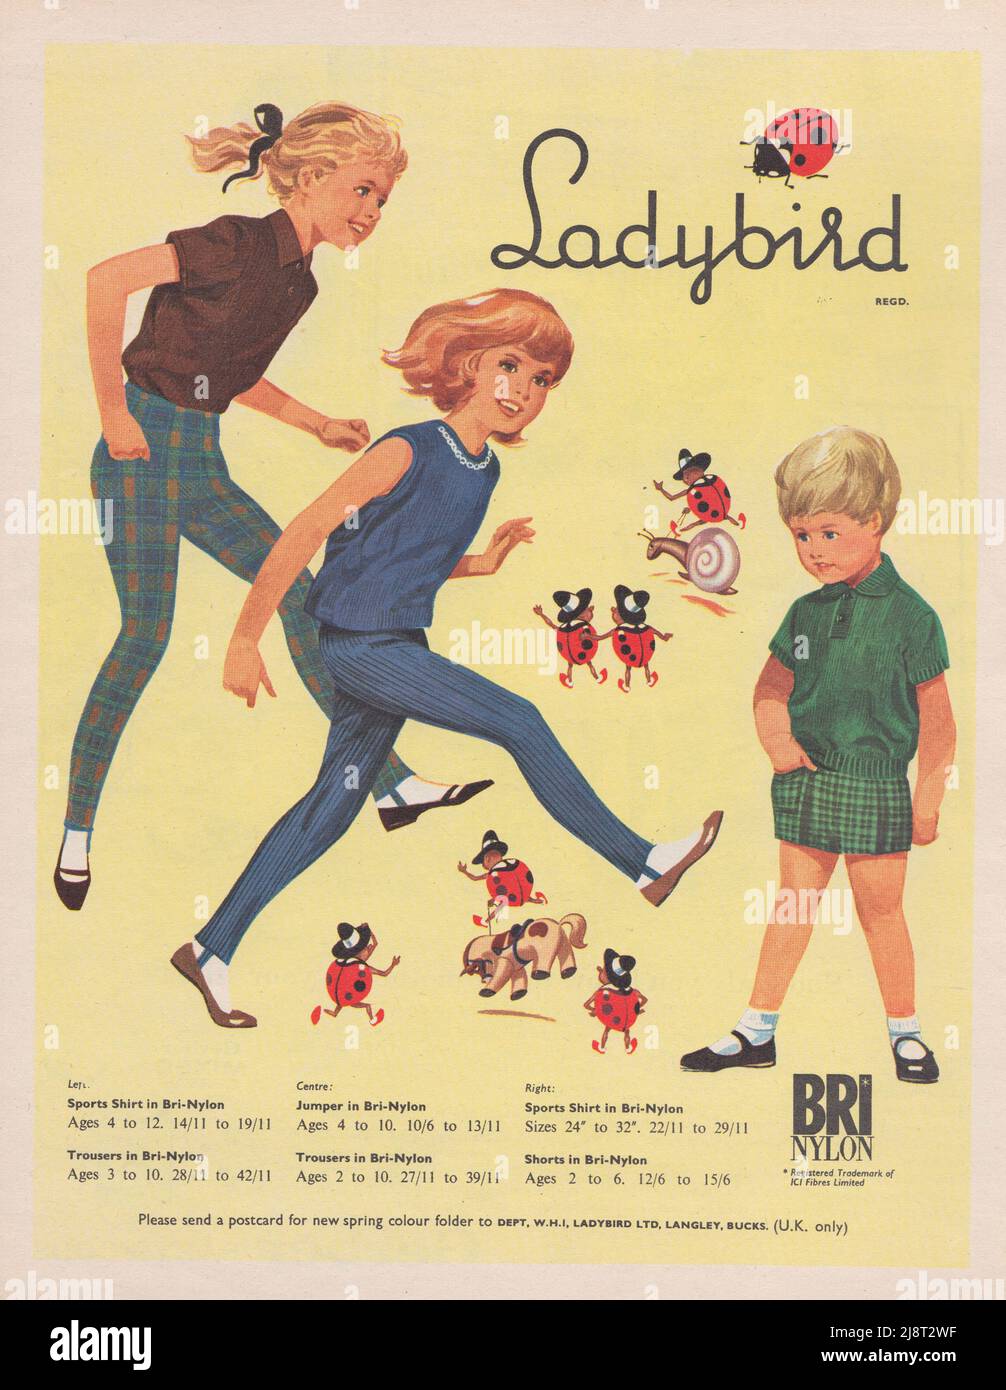 Ladybird Children's clothes children's wear vintage advertisement advert paper advert Stock Photo